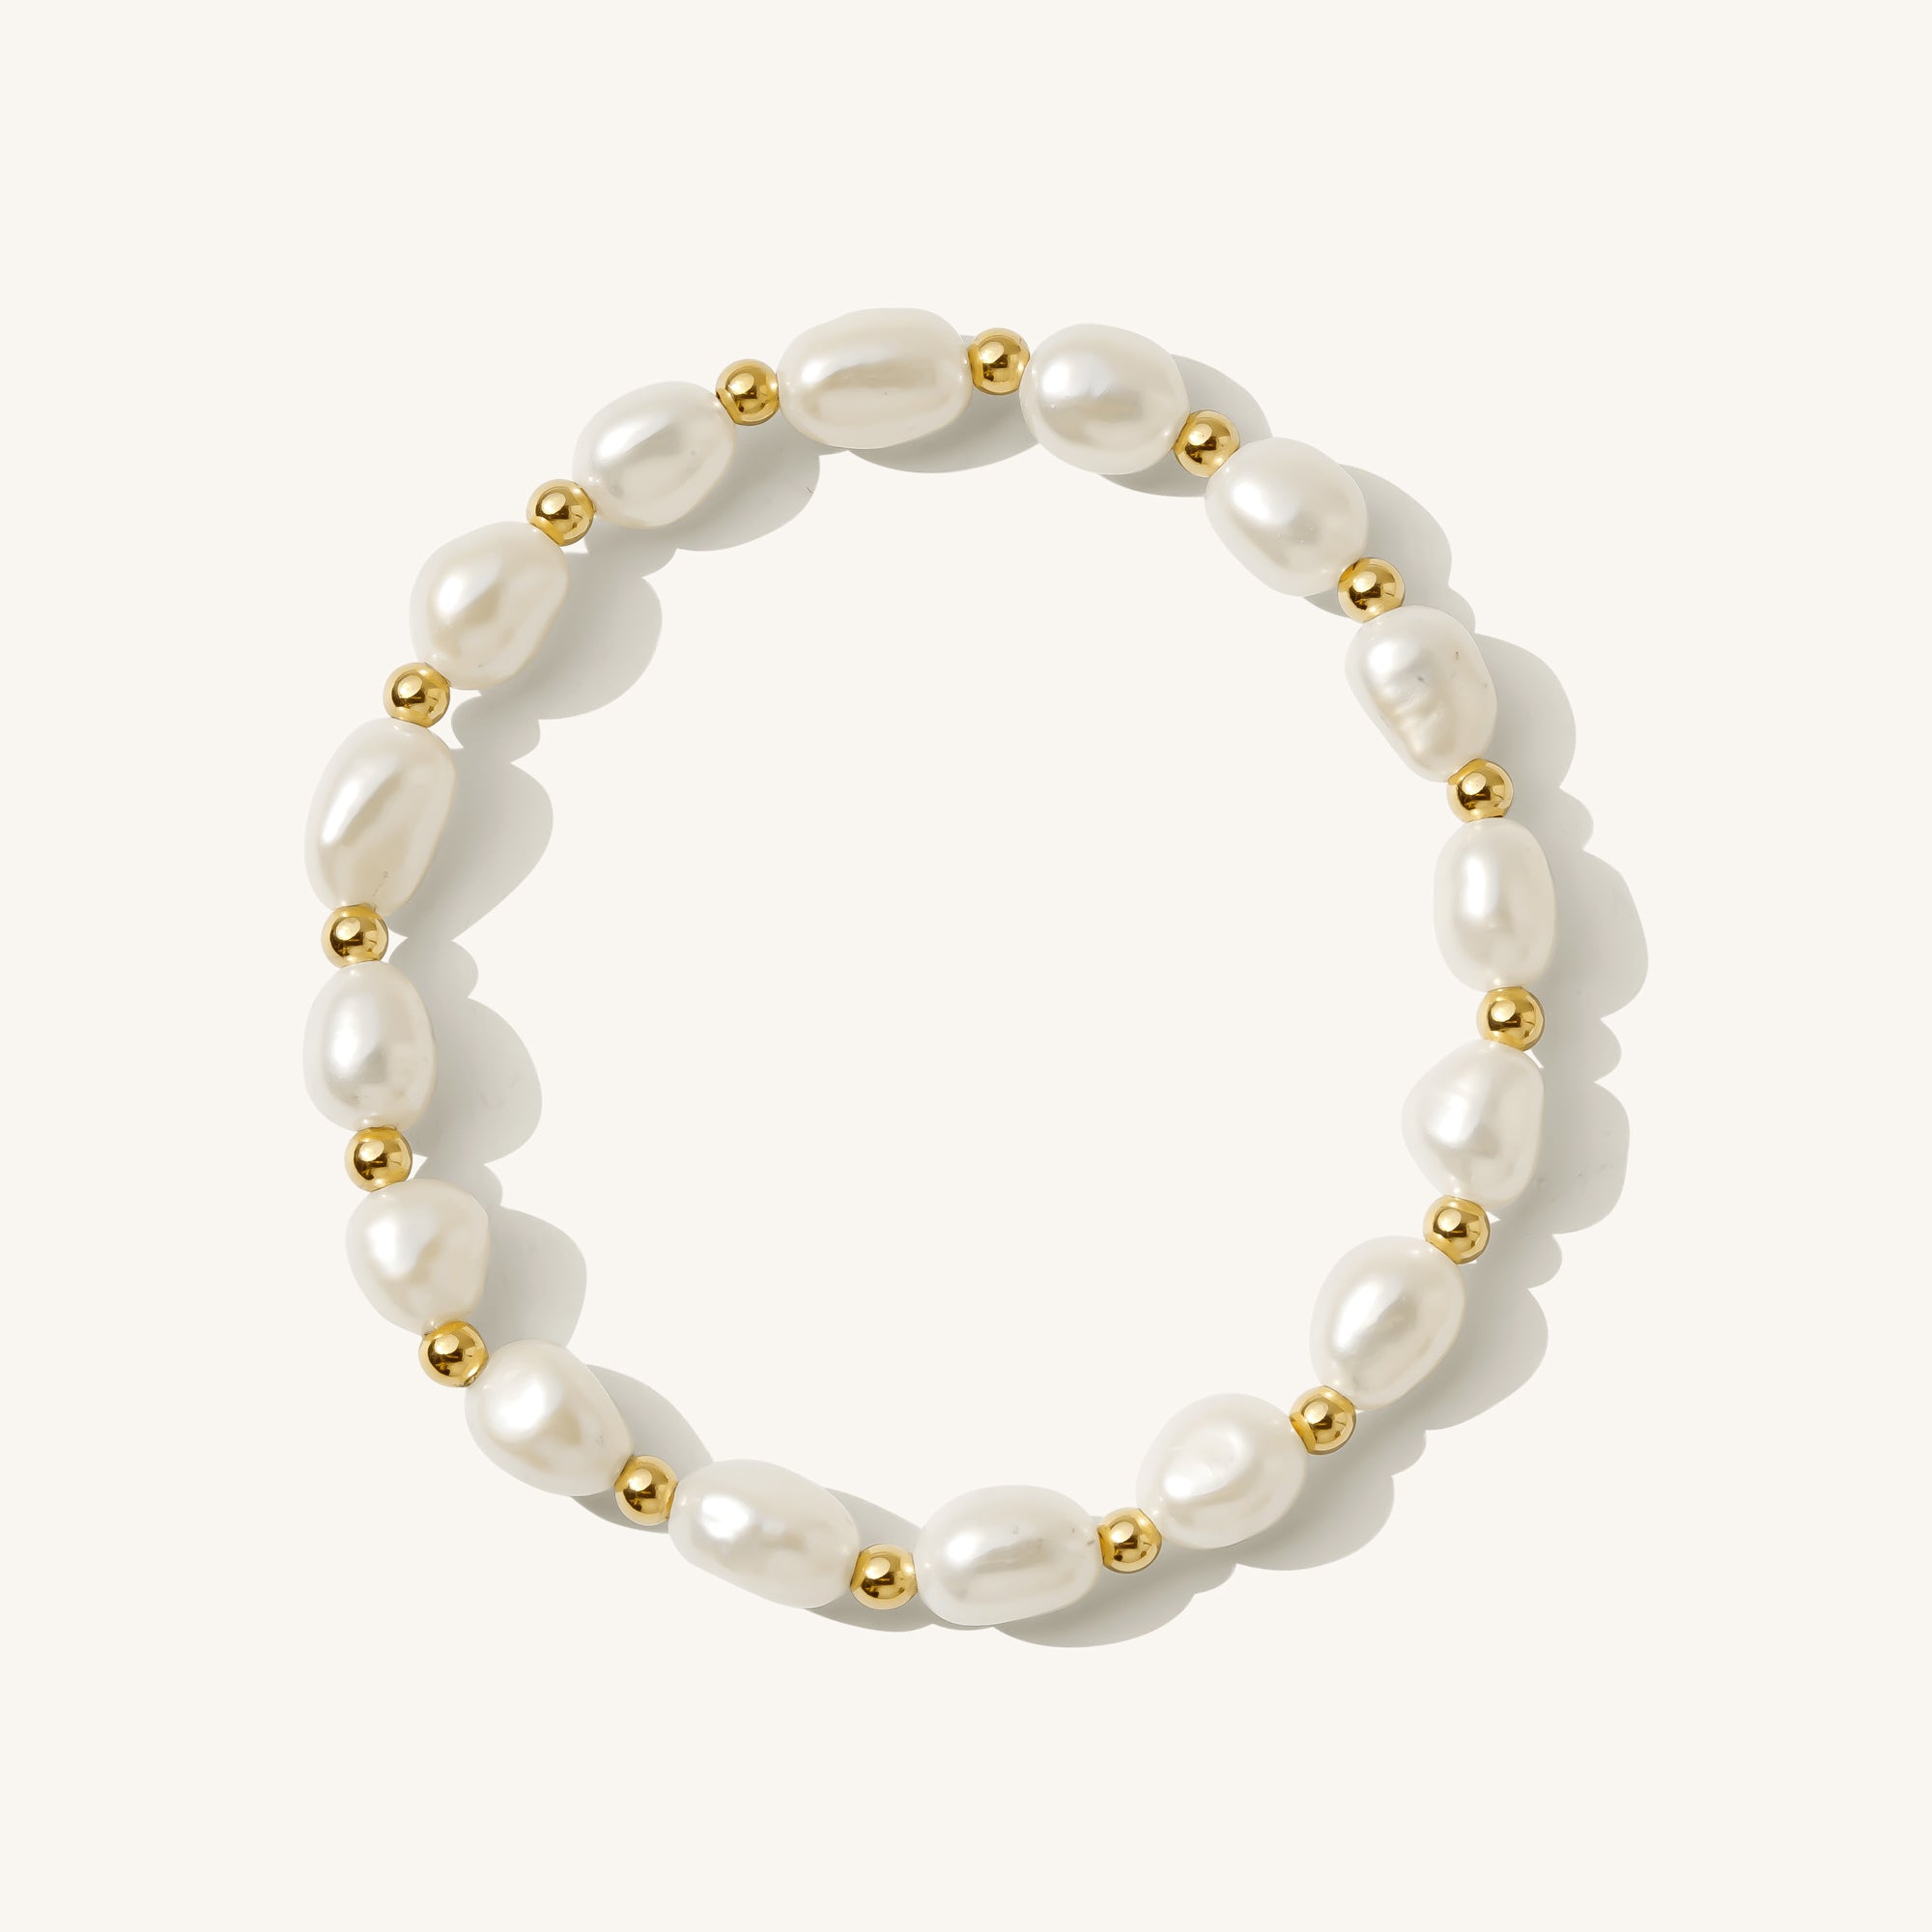 Buy White Handcrafted Pearl Beaded Bracelet | KJ-KM050/KAJL1 | The loom